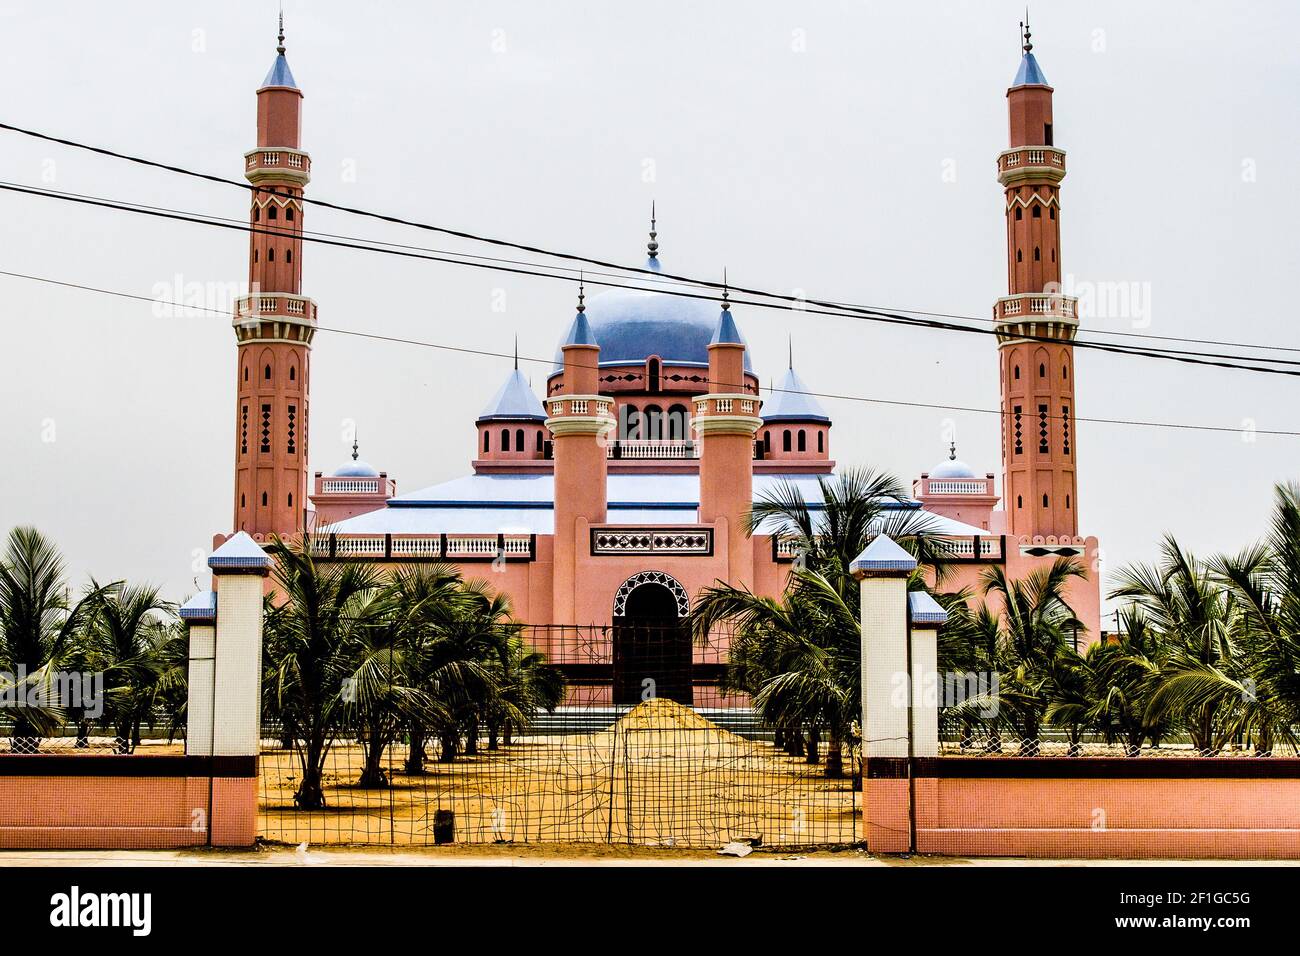 Africa, Senegal, Mbour, Grande Mosquée Gandigal-Est. The great Gandigal-Est mosque of Mbour has a beautiful architecture in pastel tones. Stock Photo